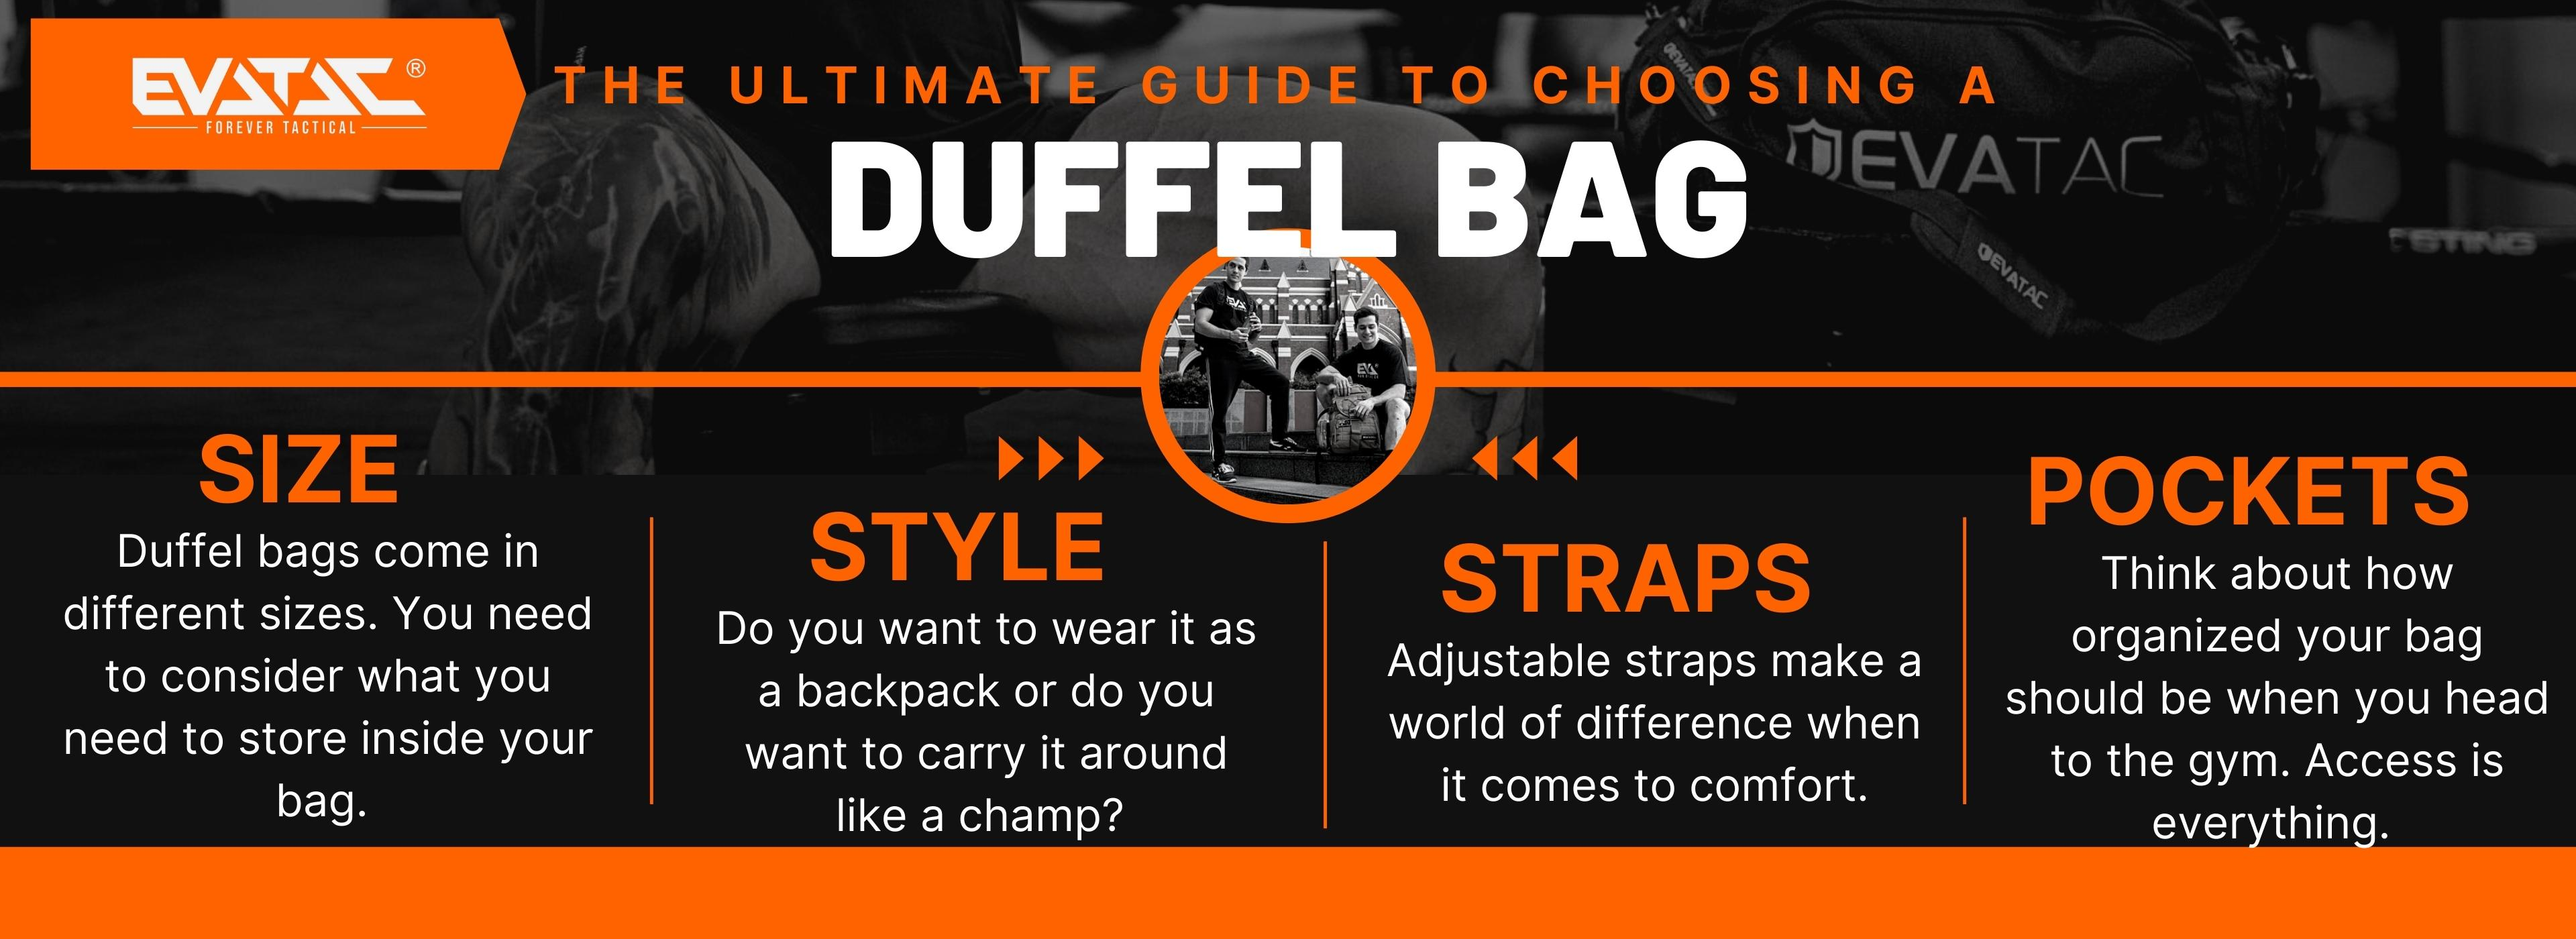 duffle bag, duffle bags, backpack, carry, luggage, backpacks